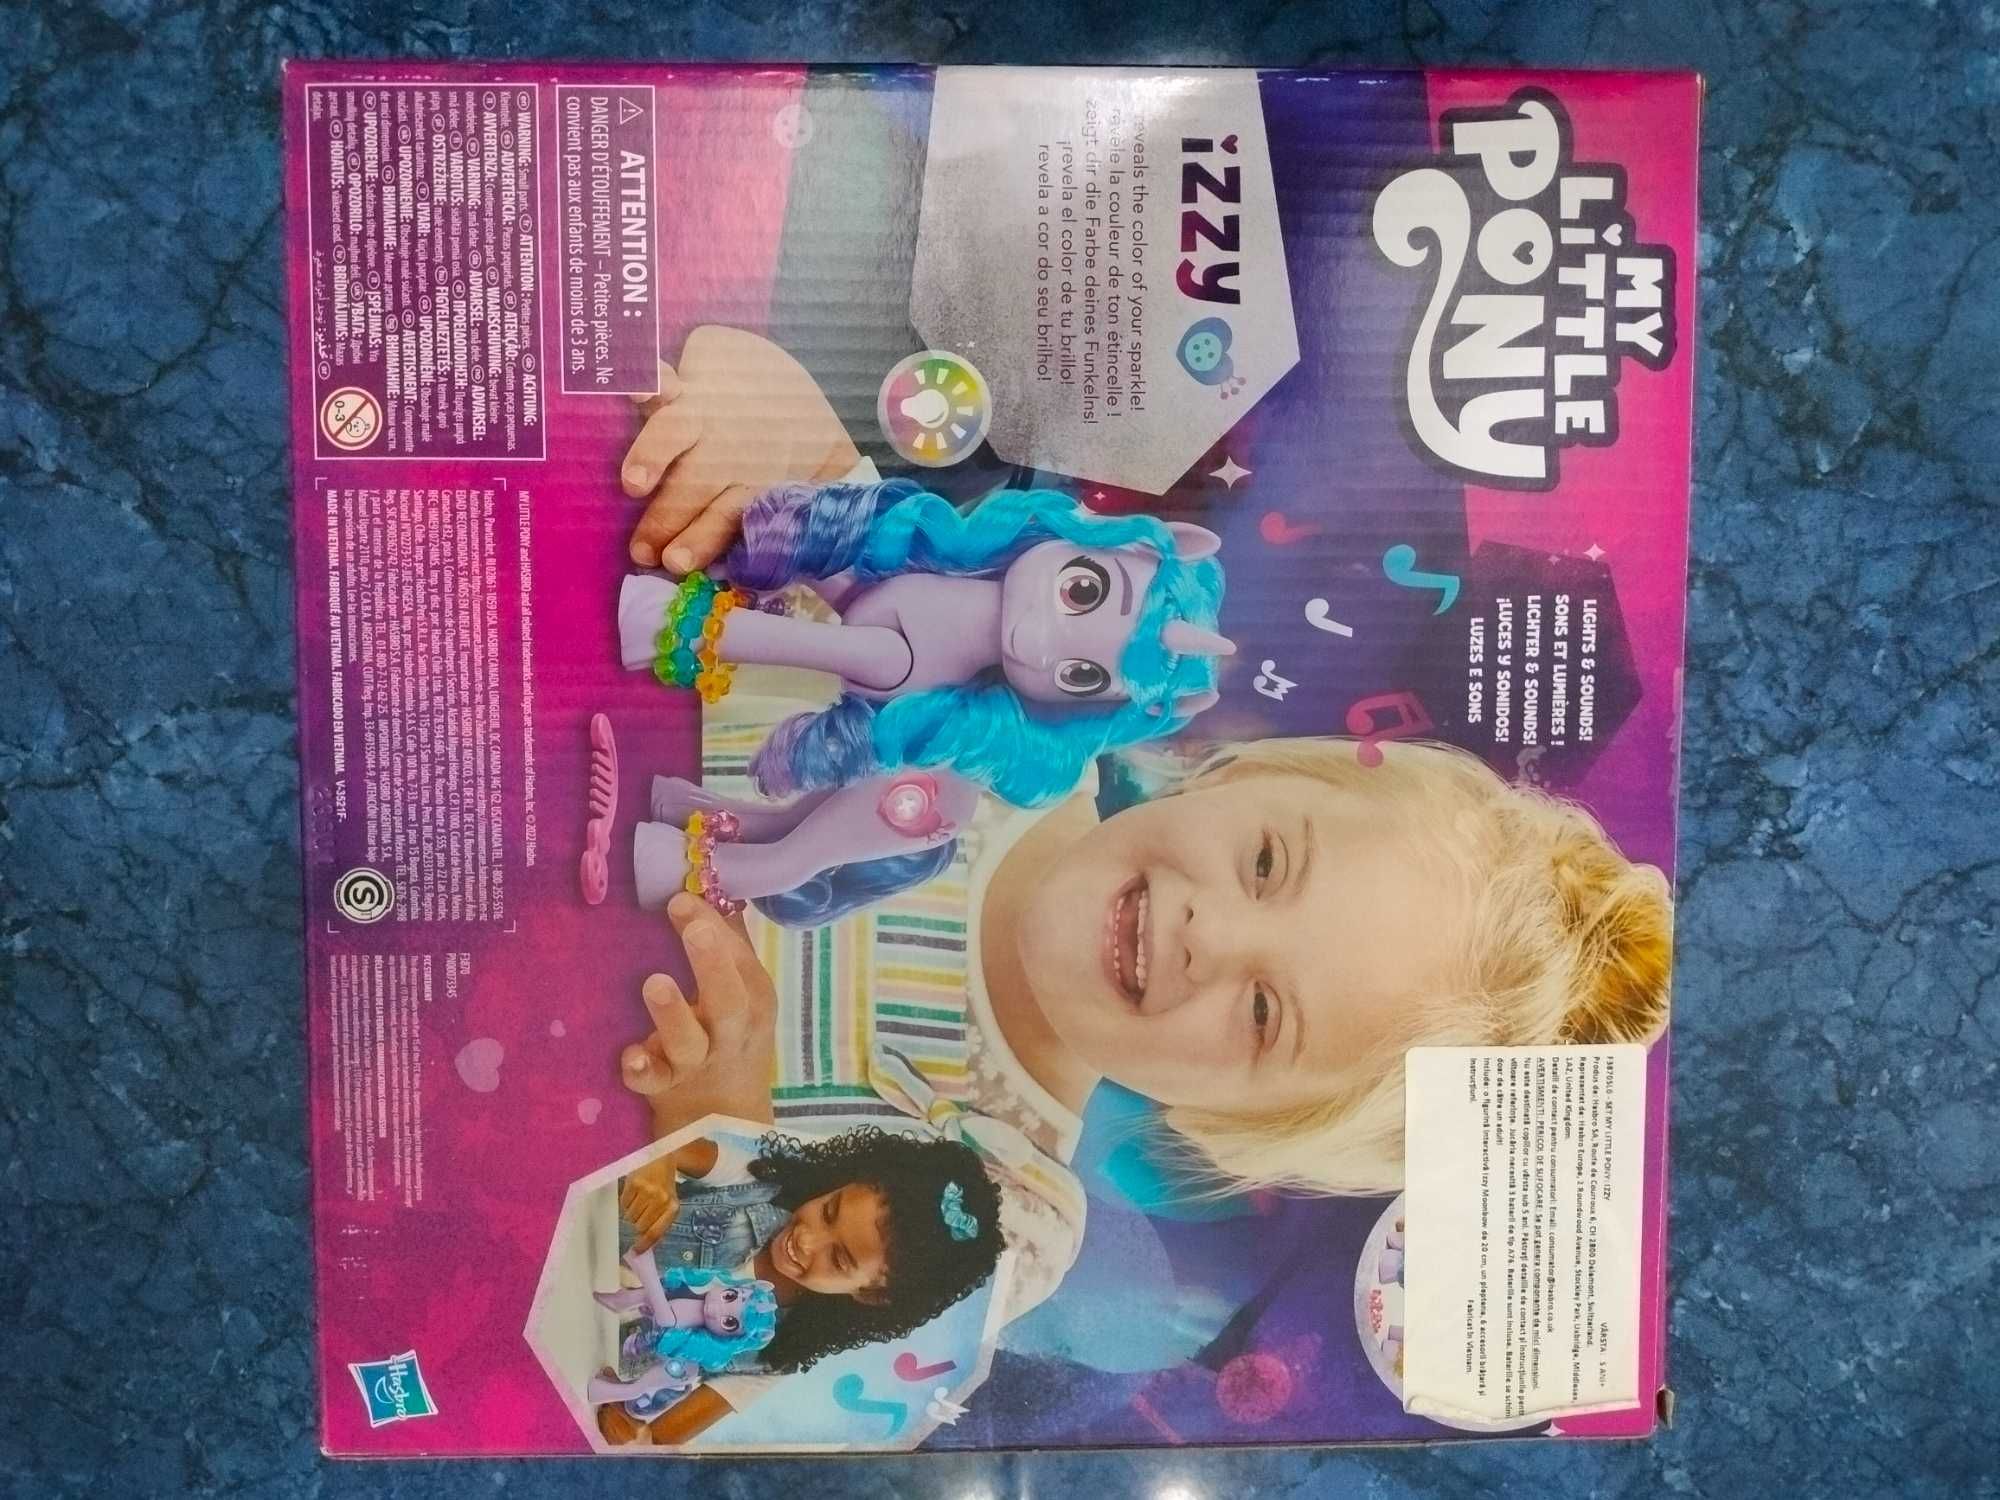 My Little Pony Izzy Moonbow + Ghiozdan grădiniță fete Frozen H28×23×10